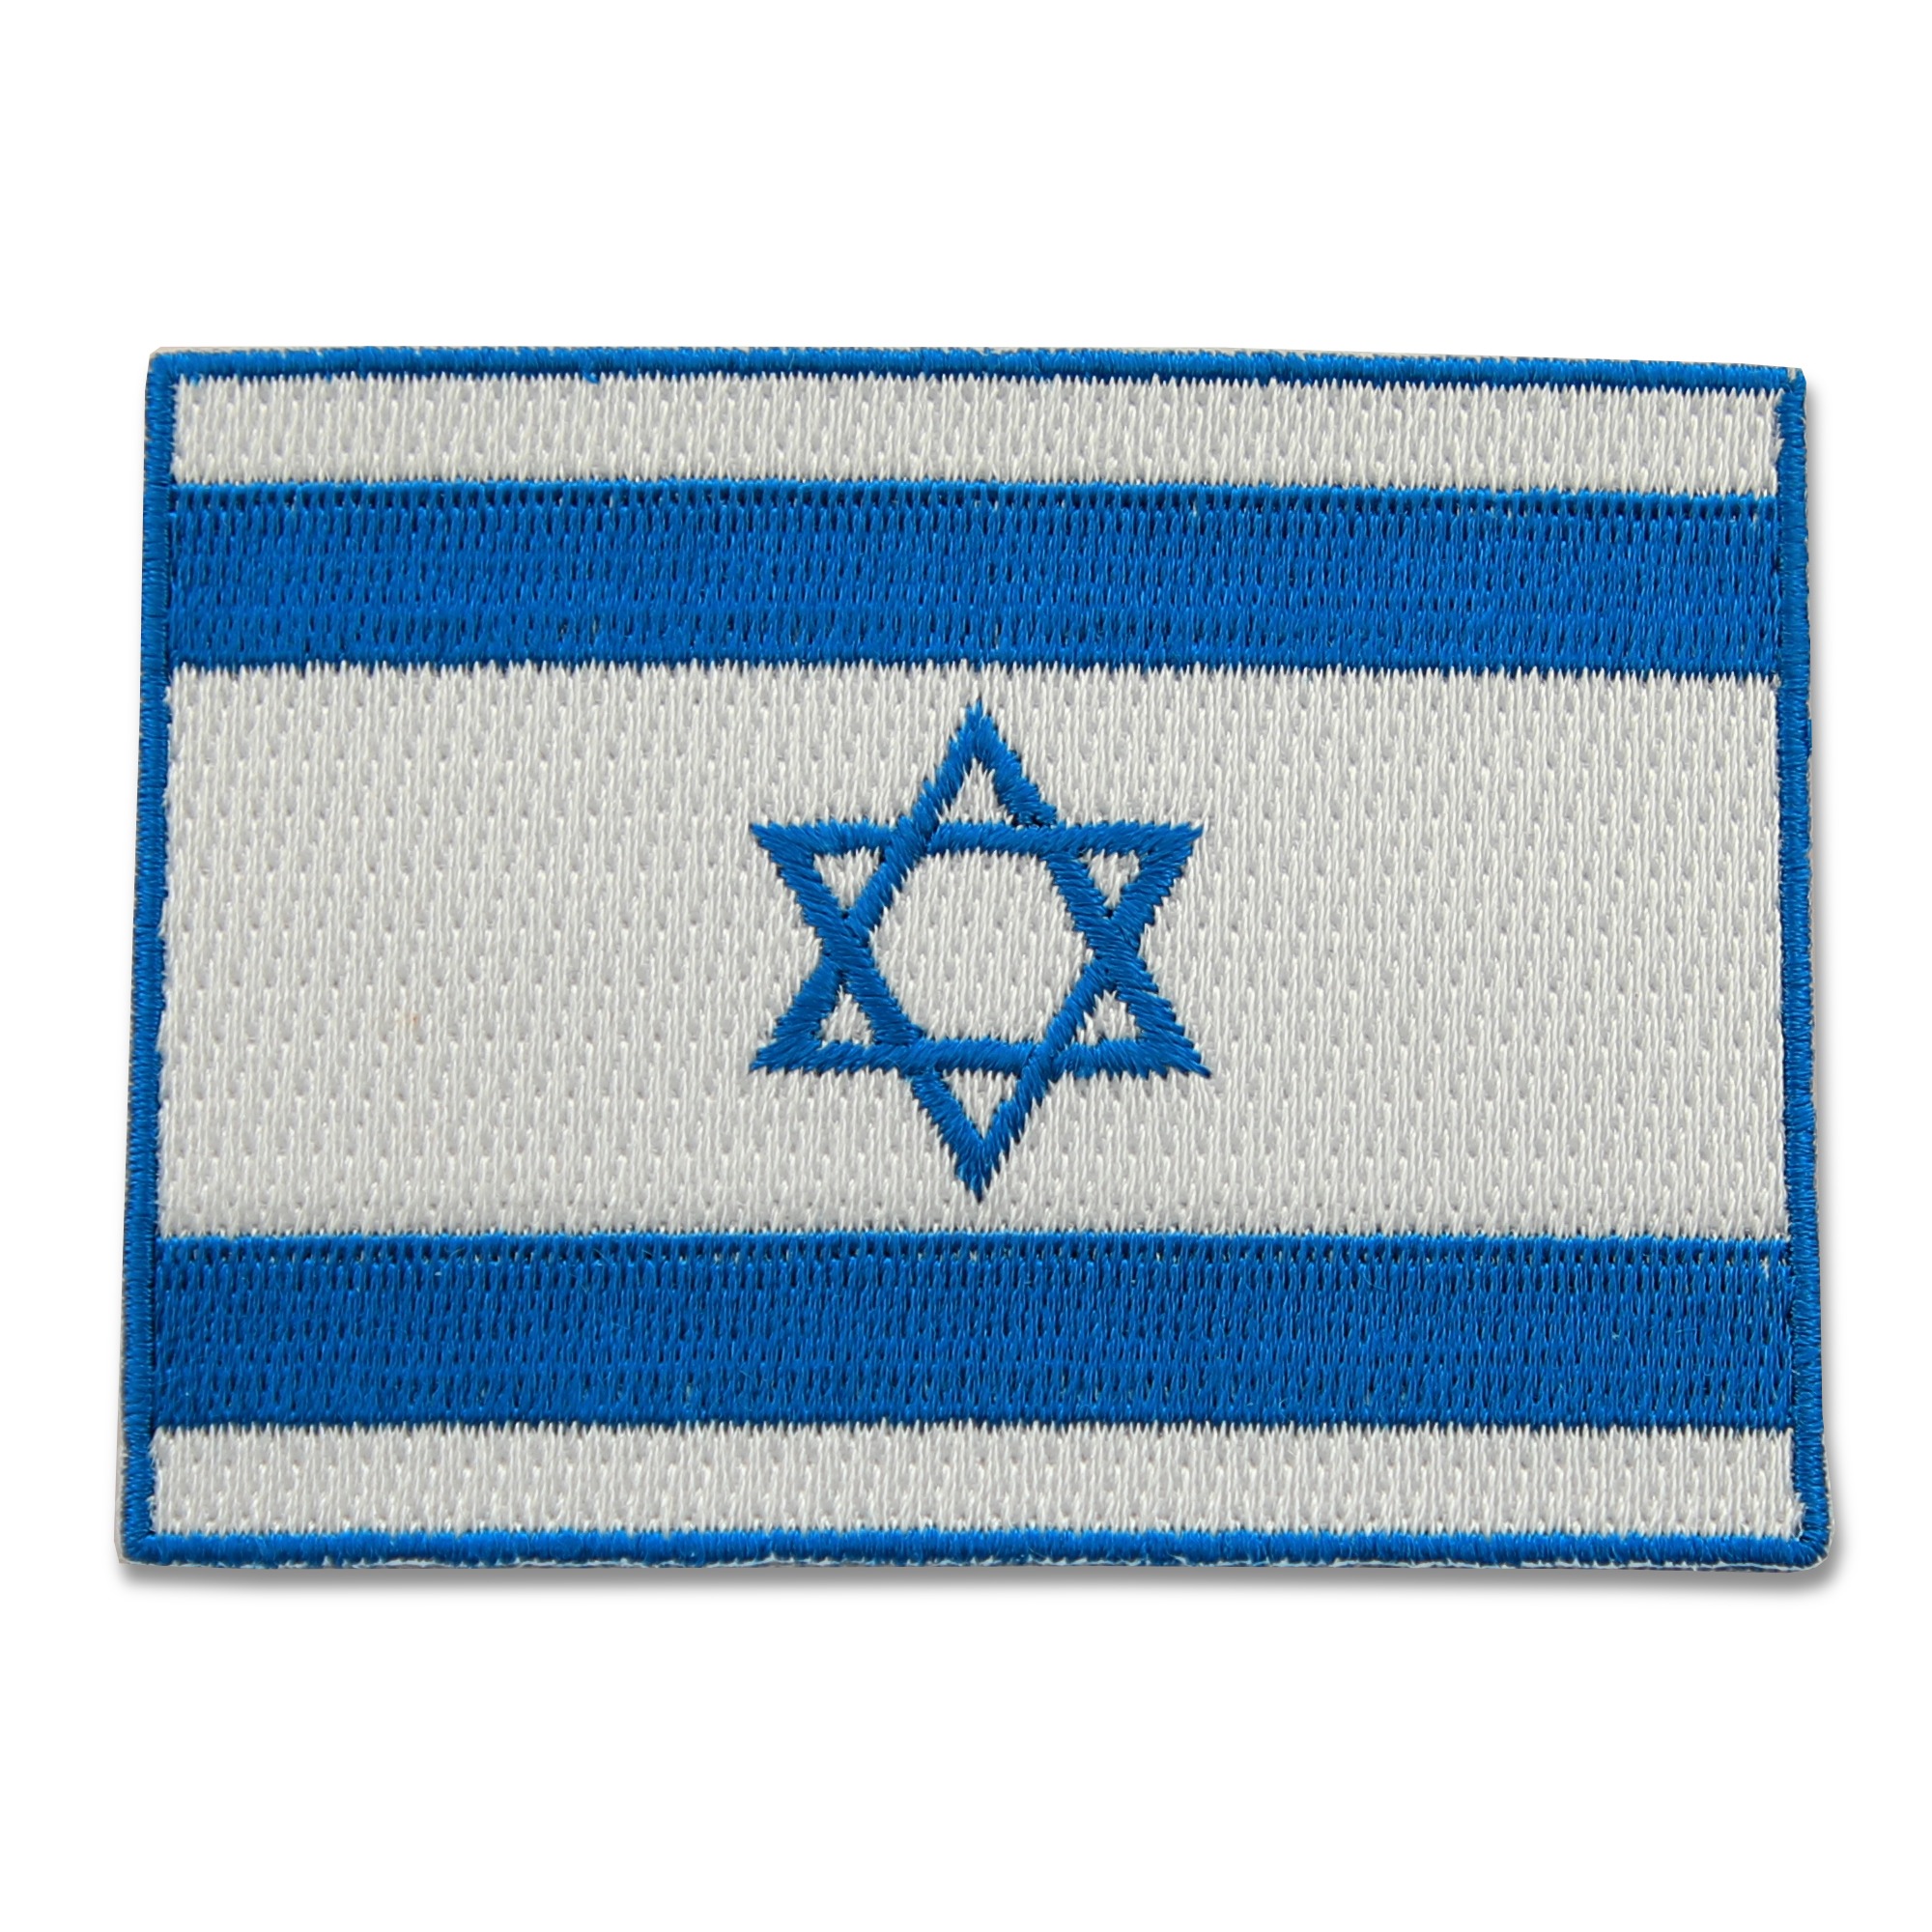 STAR of DAVID embroidered PATCH JEWISH ISRAEL JUDAICA iron-on ISRAEL SYMBOL new 